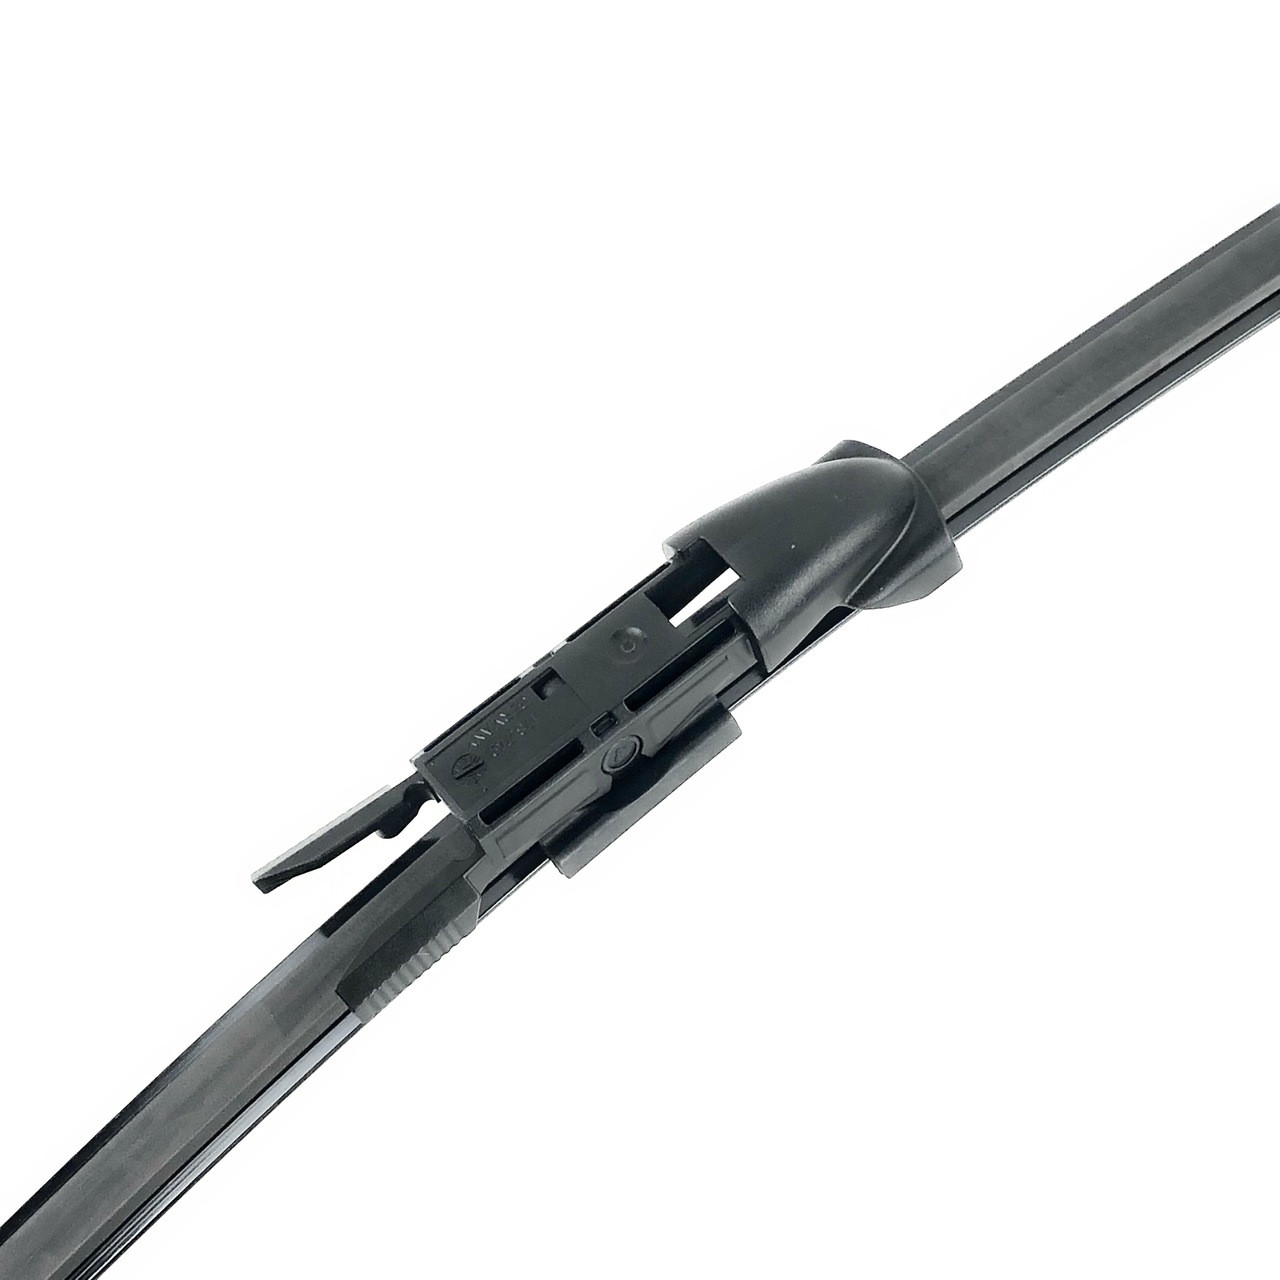 Rear Wiper Blade - LR104005